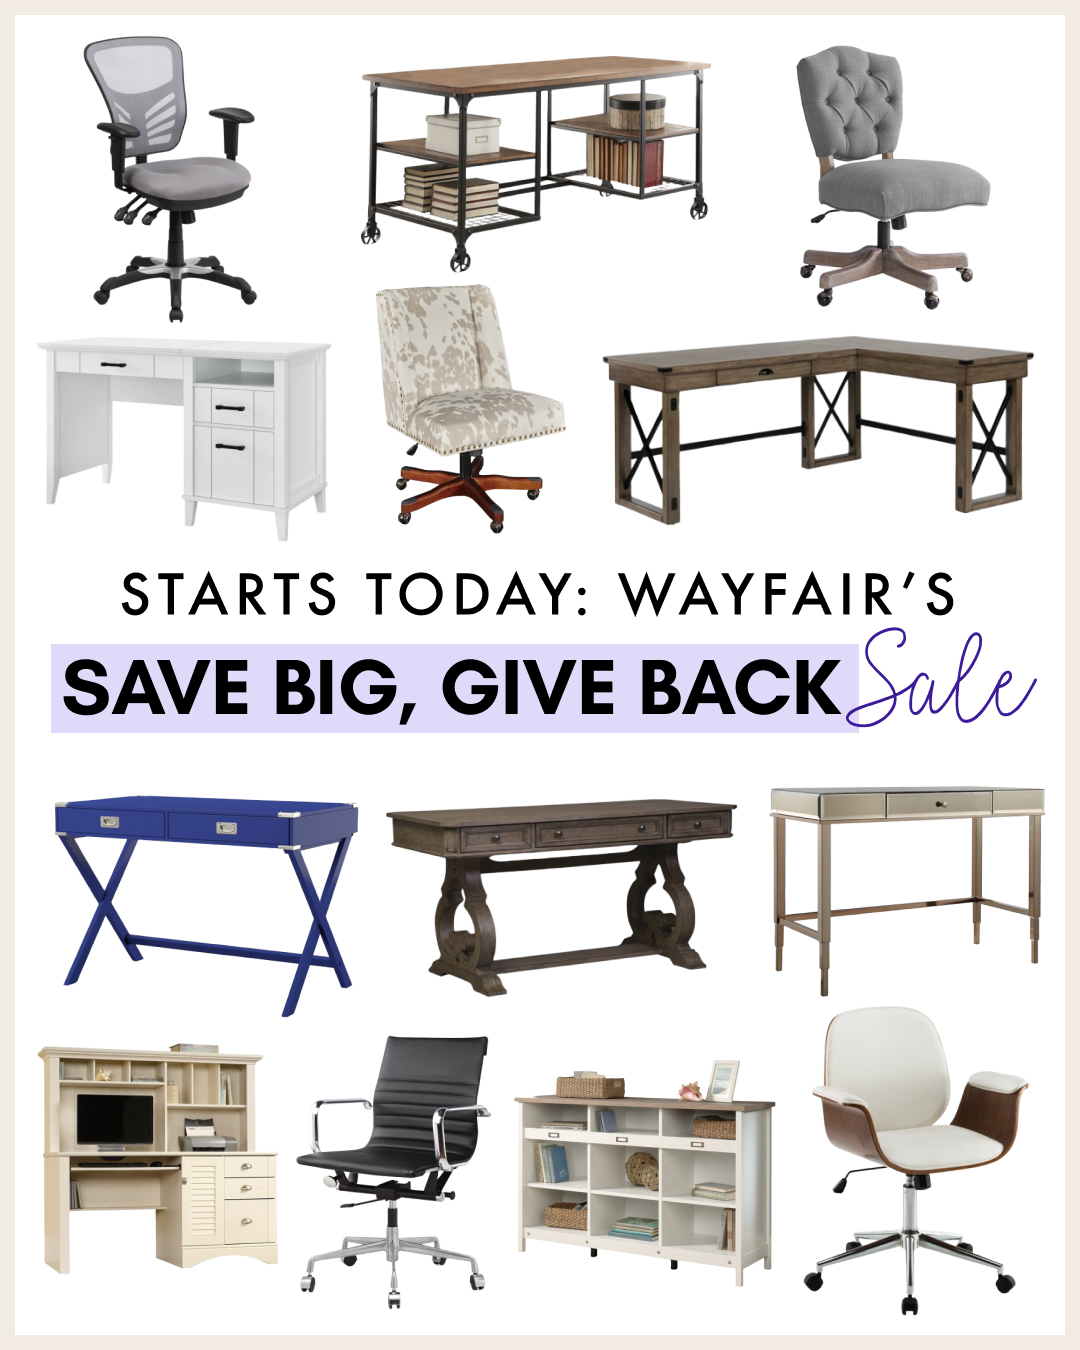 Wayfair's Save Big Give Back Sale Starts TODAY!